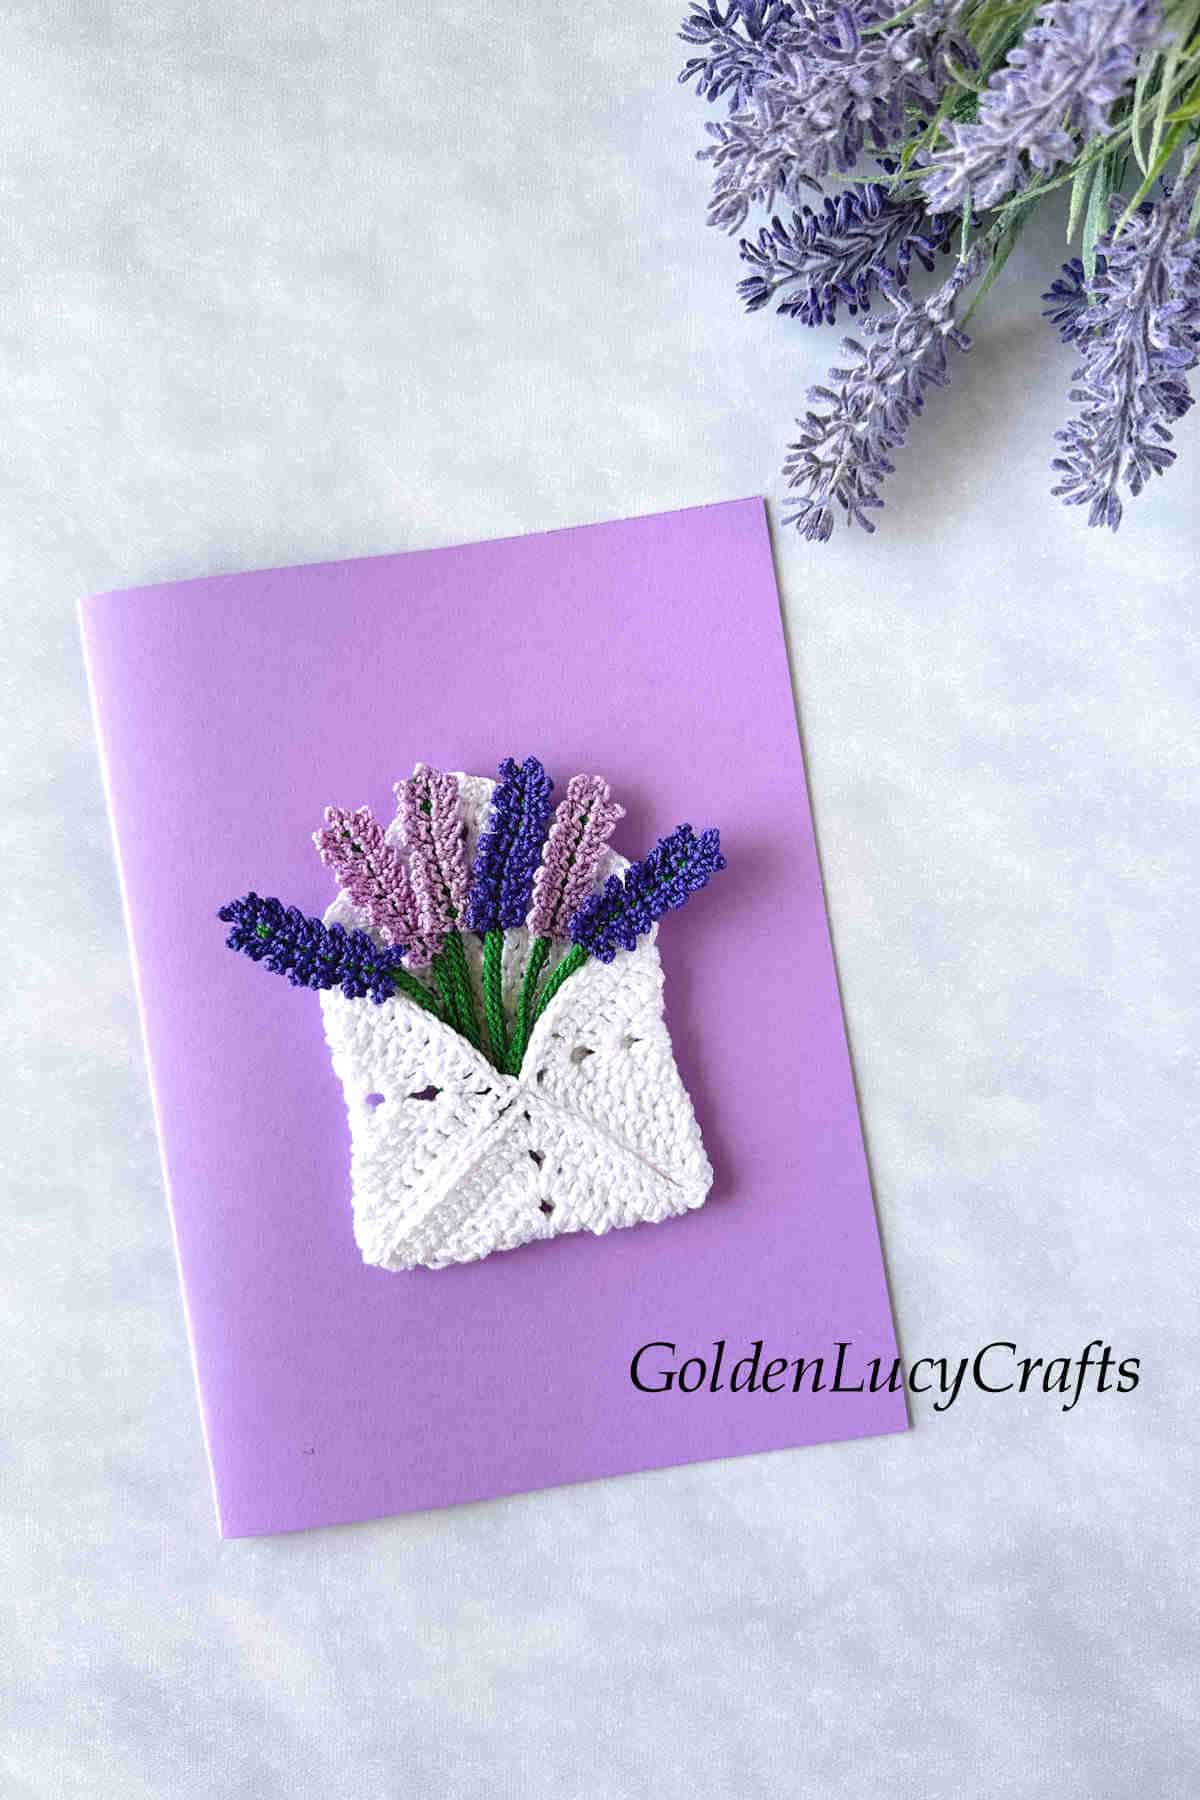 Handmade card with crochet lavender envelope applique on it.